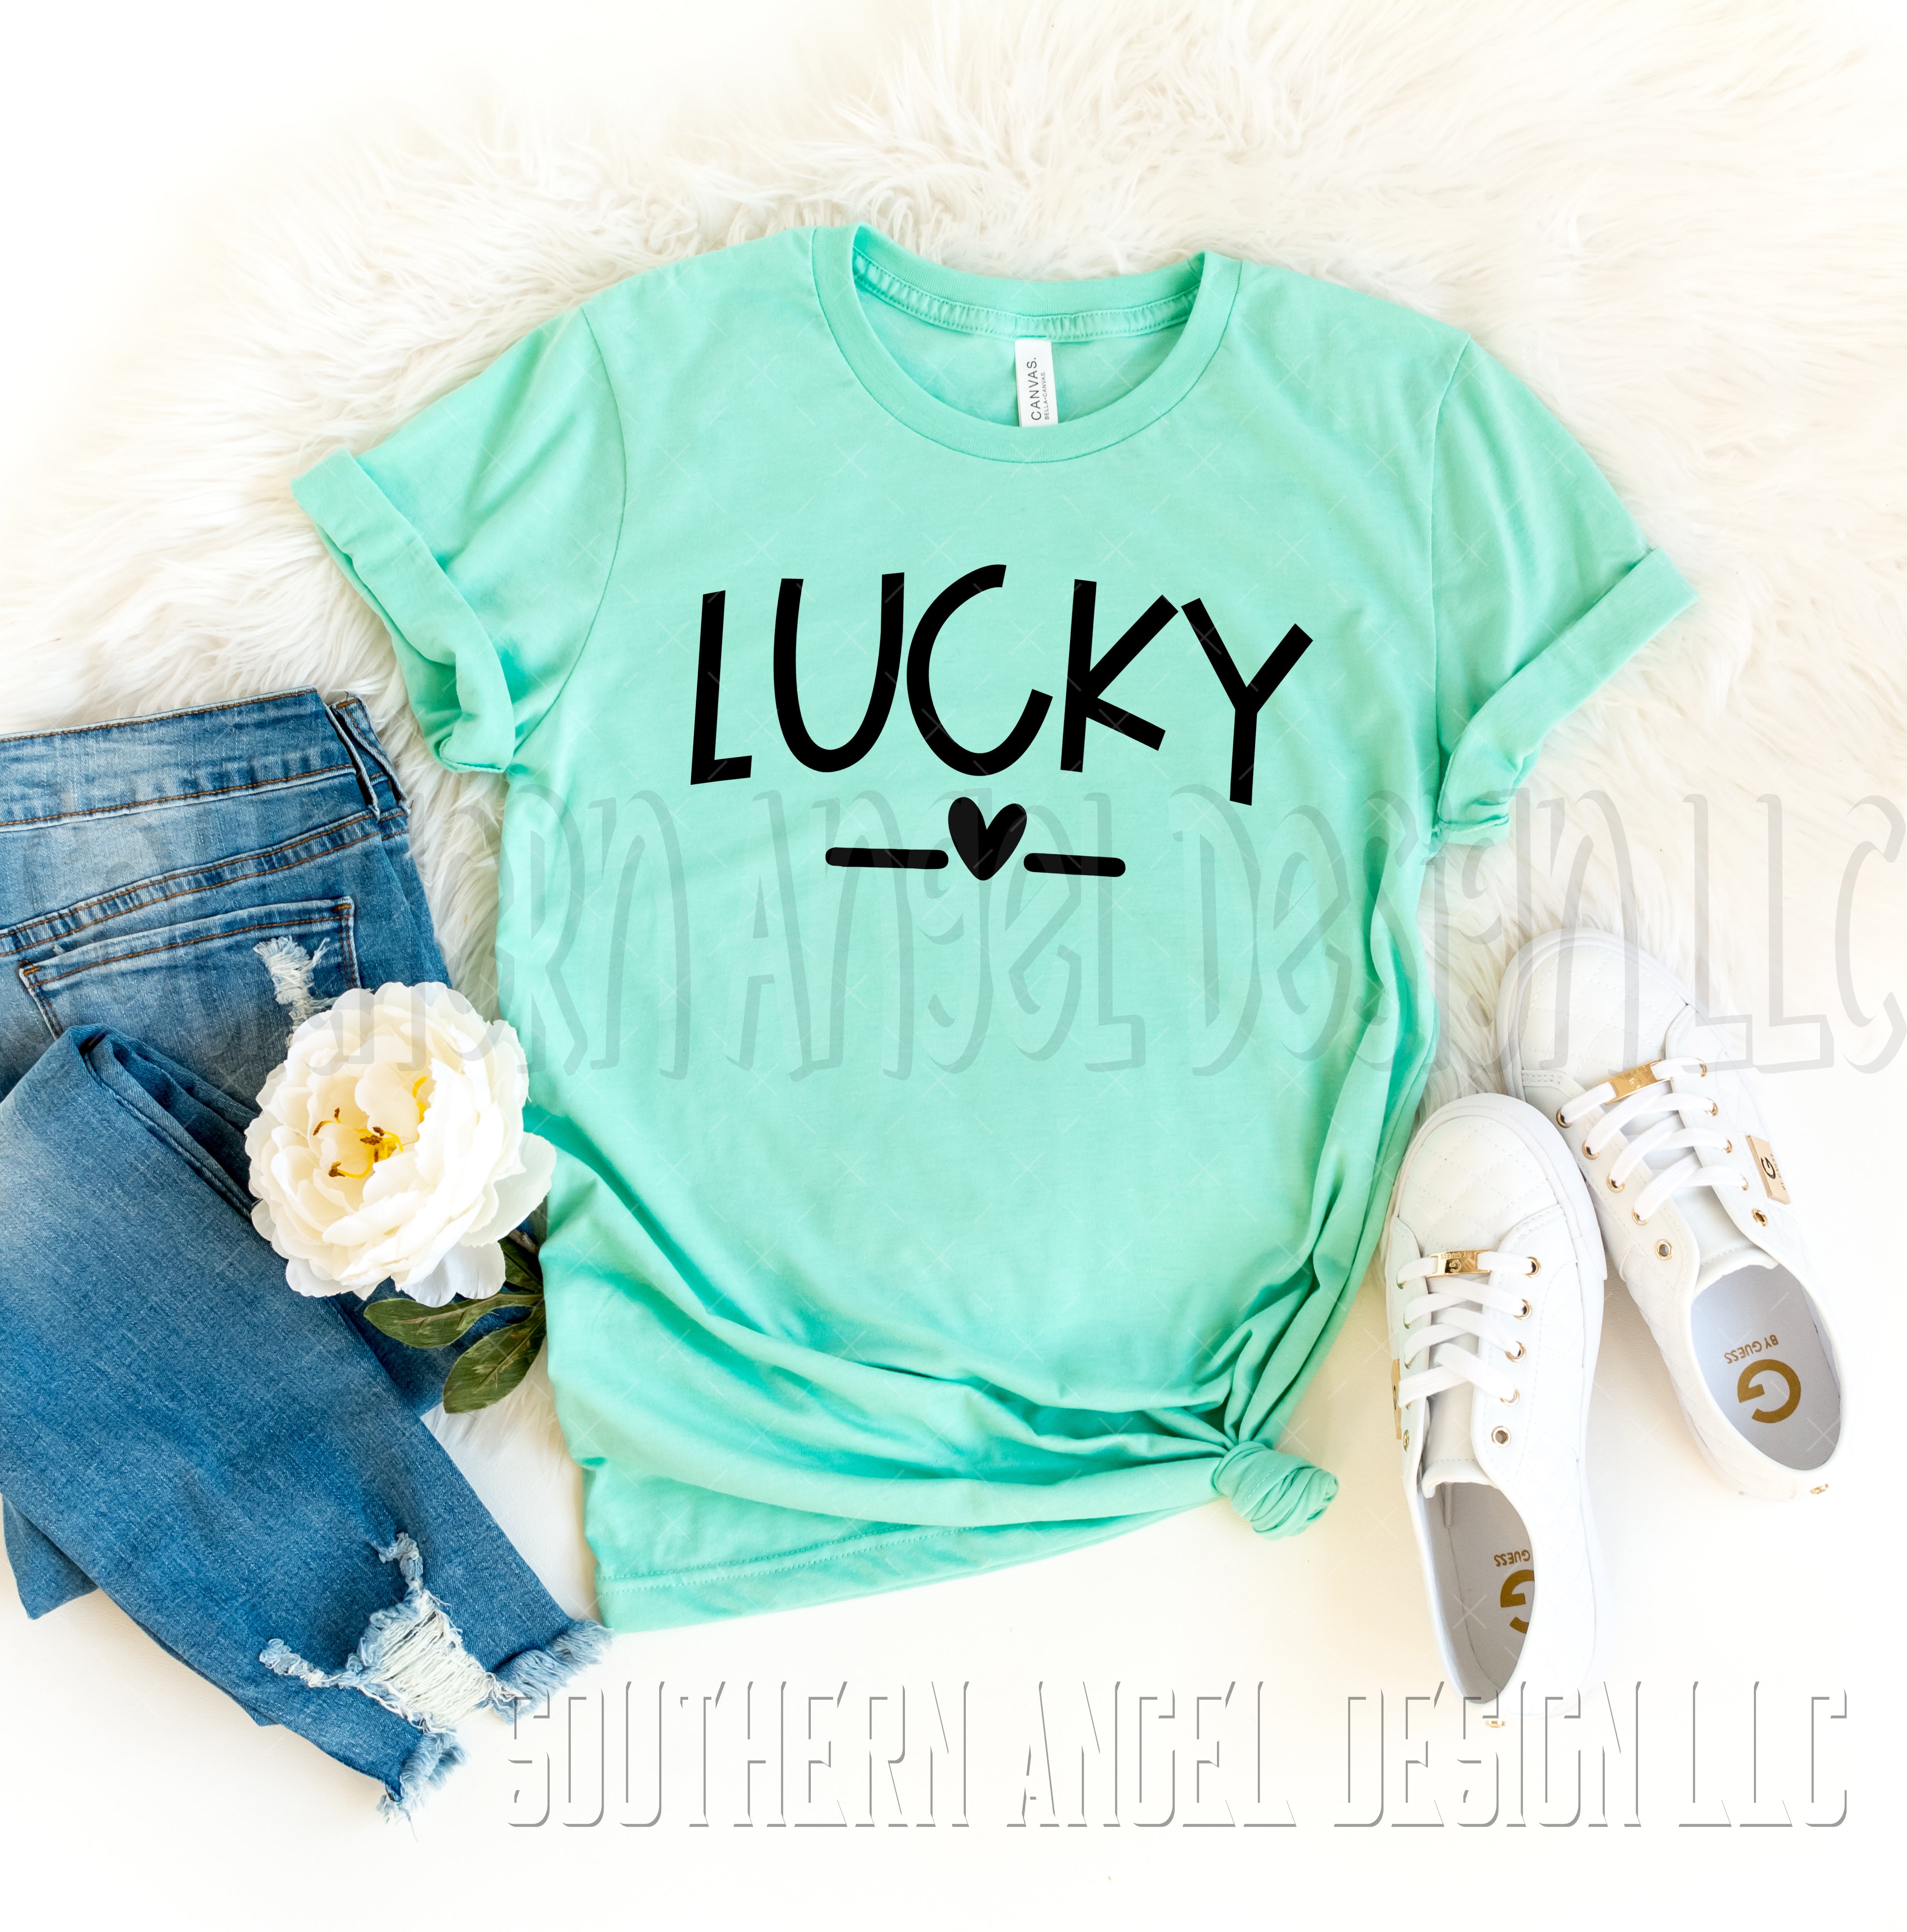 Light Gray Bachelorette party t-shirt image_e7b85ec6-48cc-4f55-8c9a-32077a222bf3.jpg bachelorette-party-shirt-its-the-04109